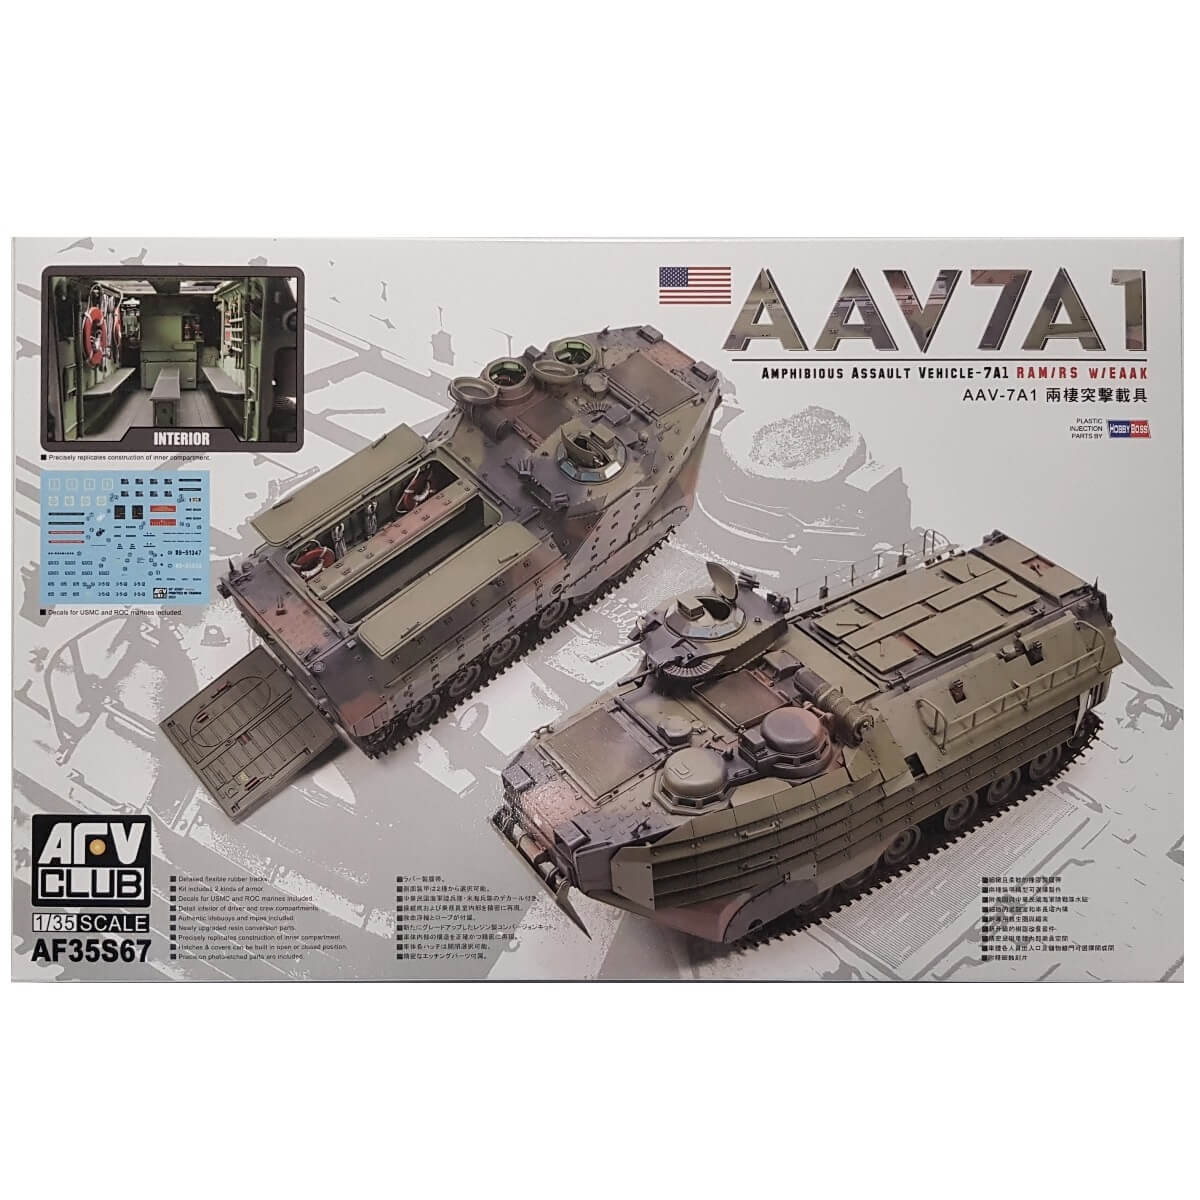 1:35 AAV7A1 Amphibious Assault Vehicle-7A1 RAM/RS with EAAK - AFV CLUB